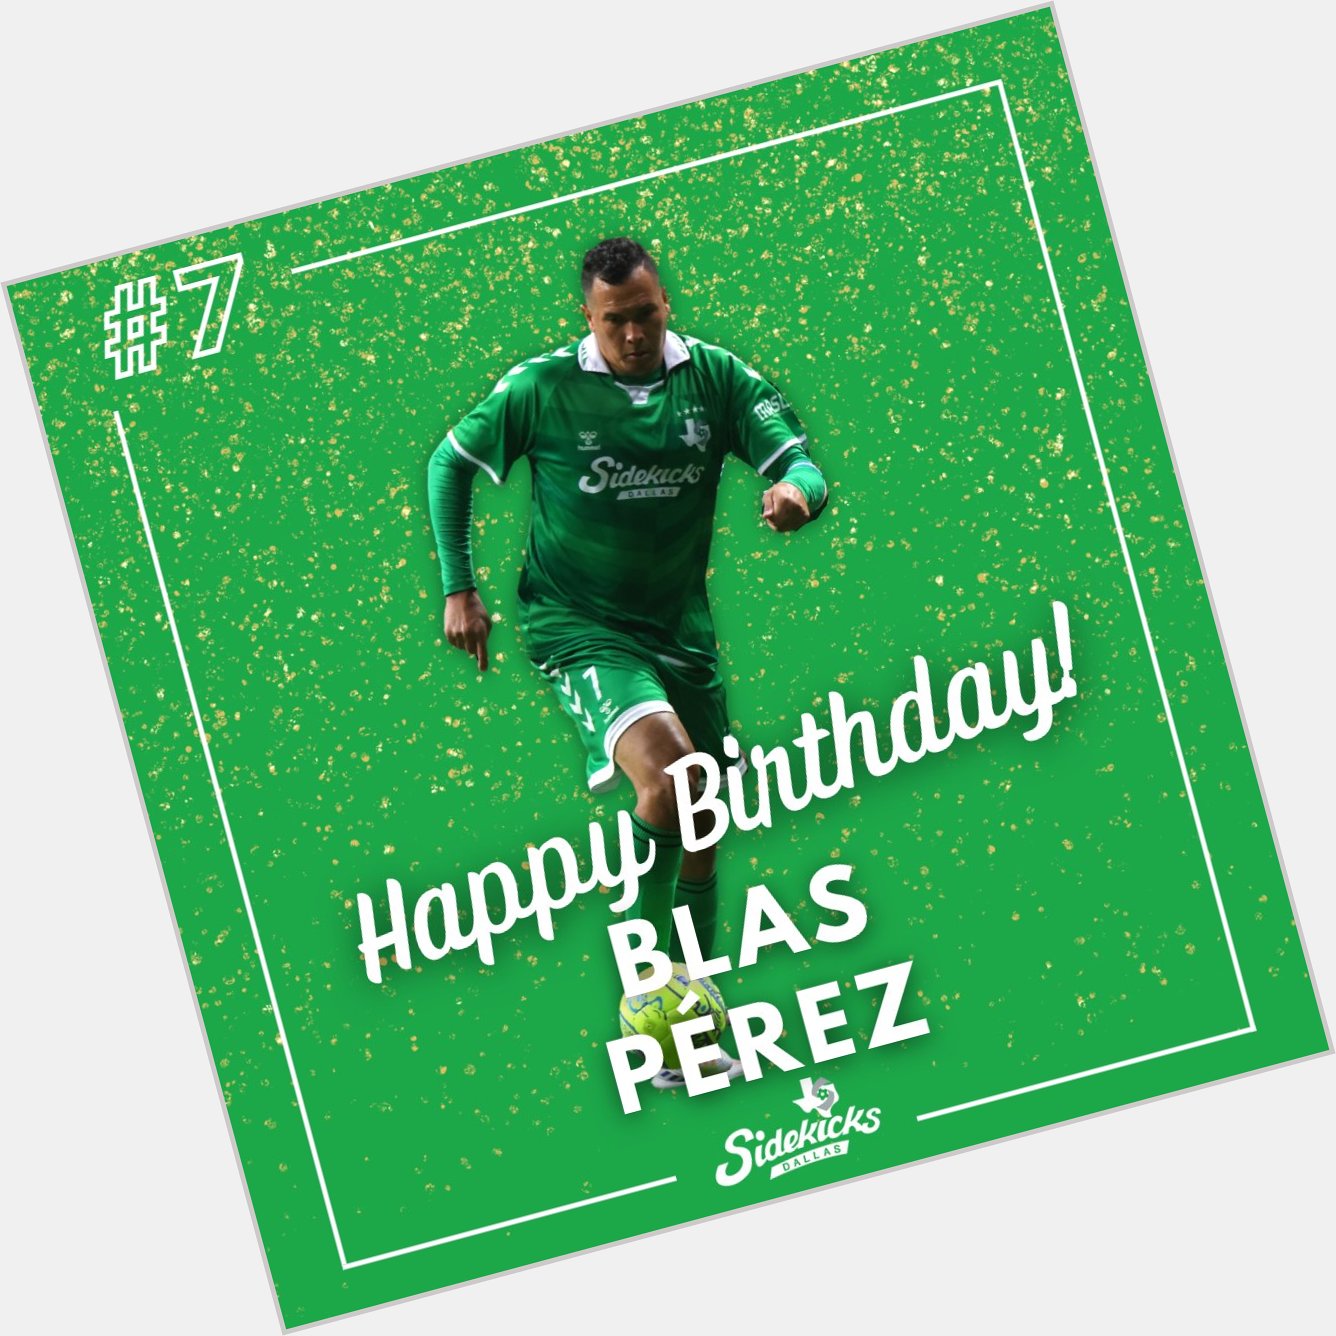  HAPPY BIRTHDAY BLAS PÈREZ Blas has played in 6 games and has scored 9 goals this season!  